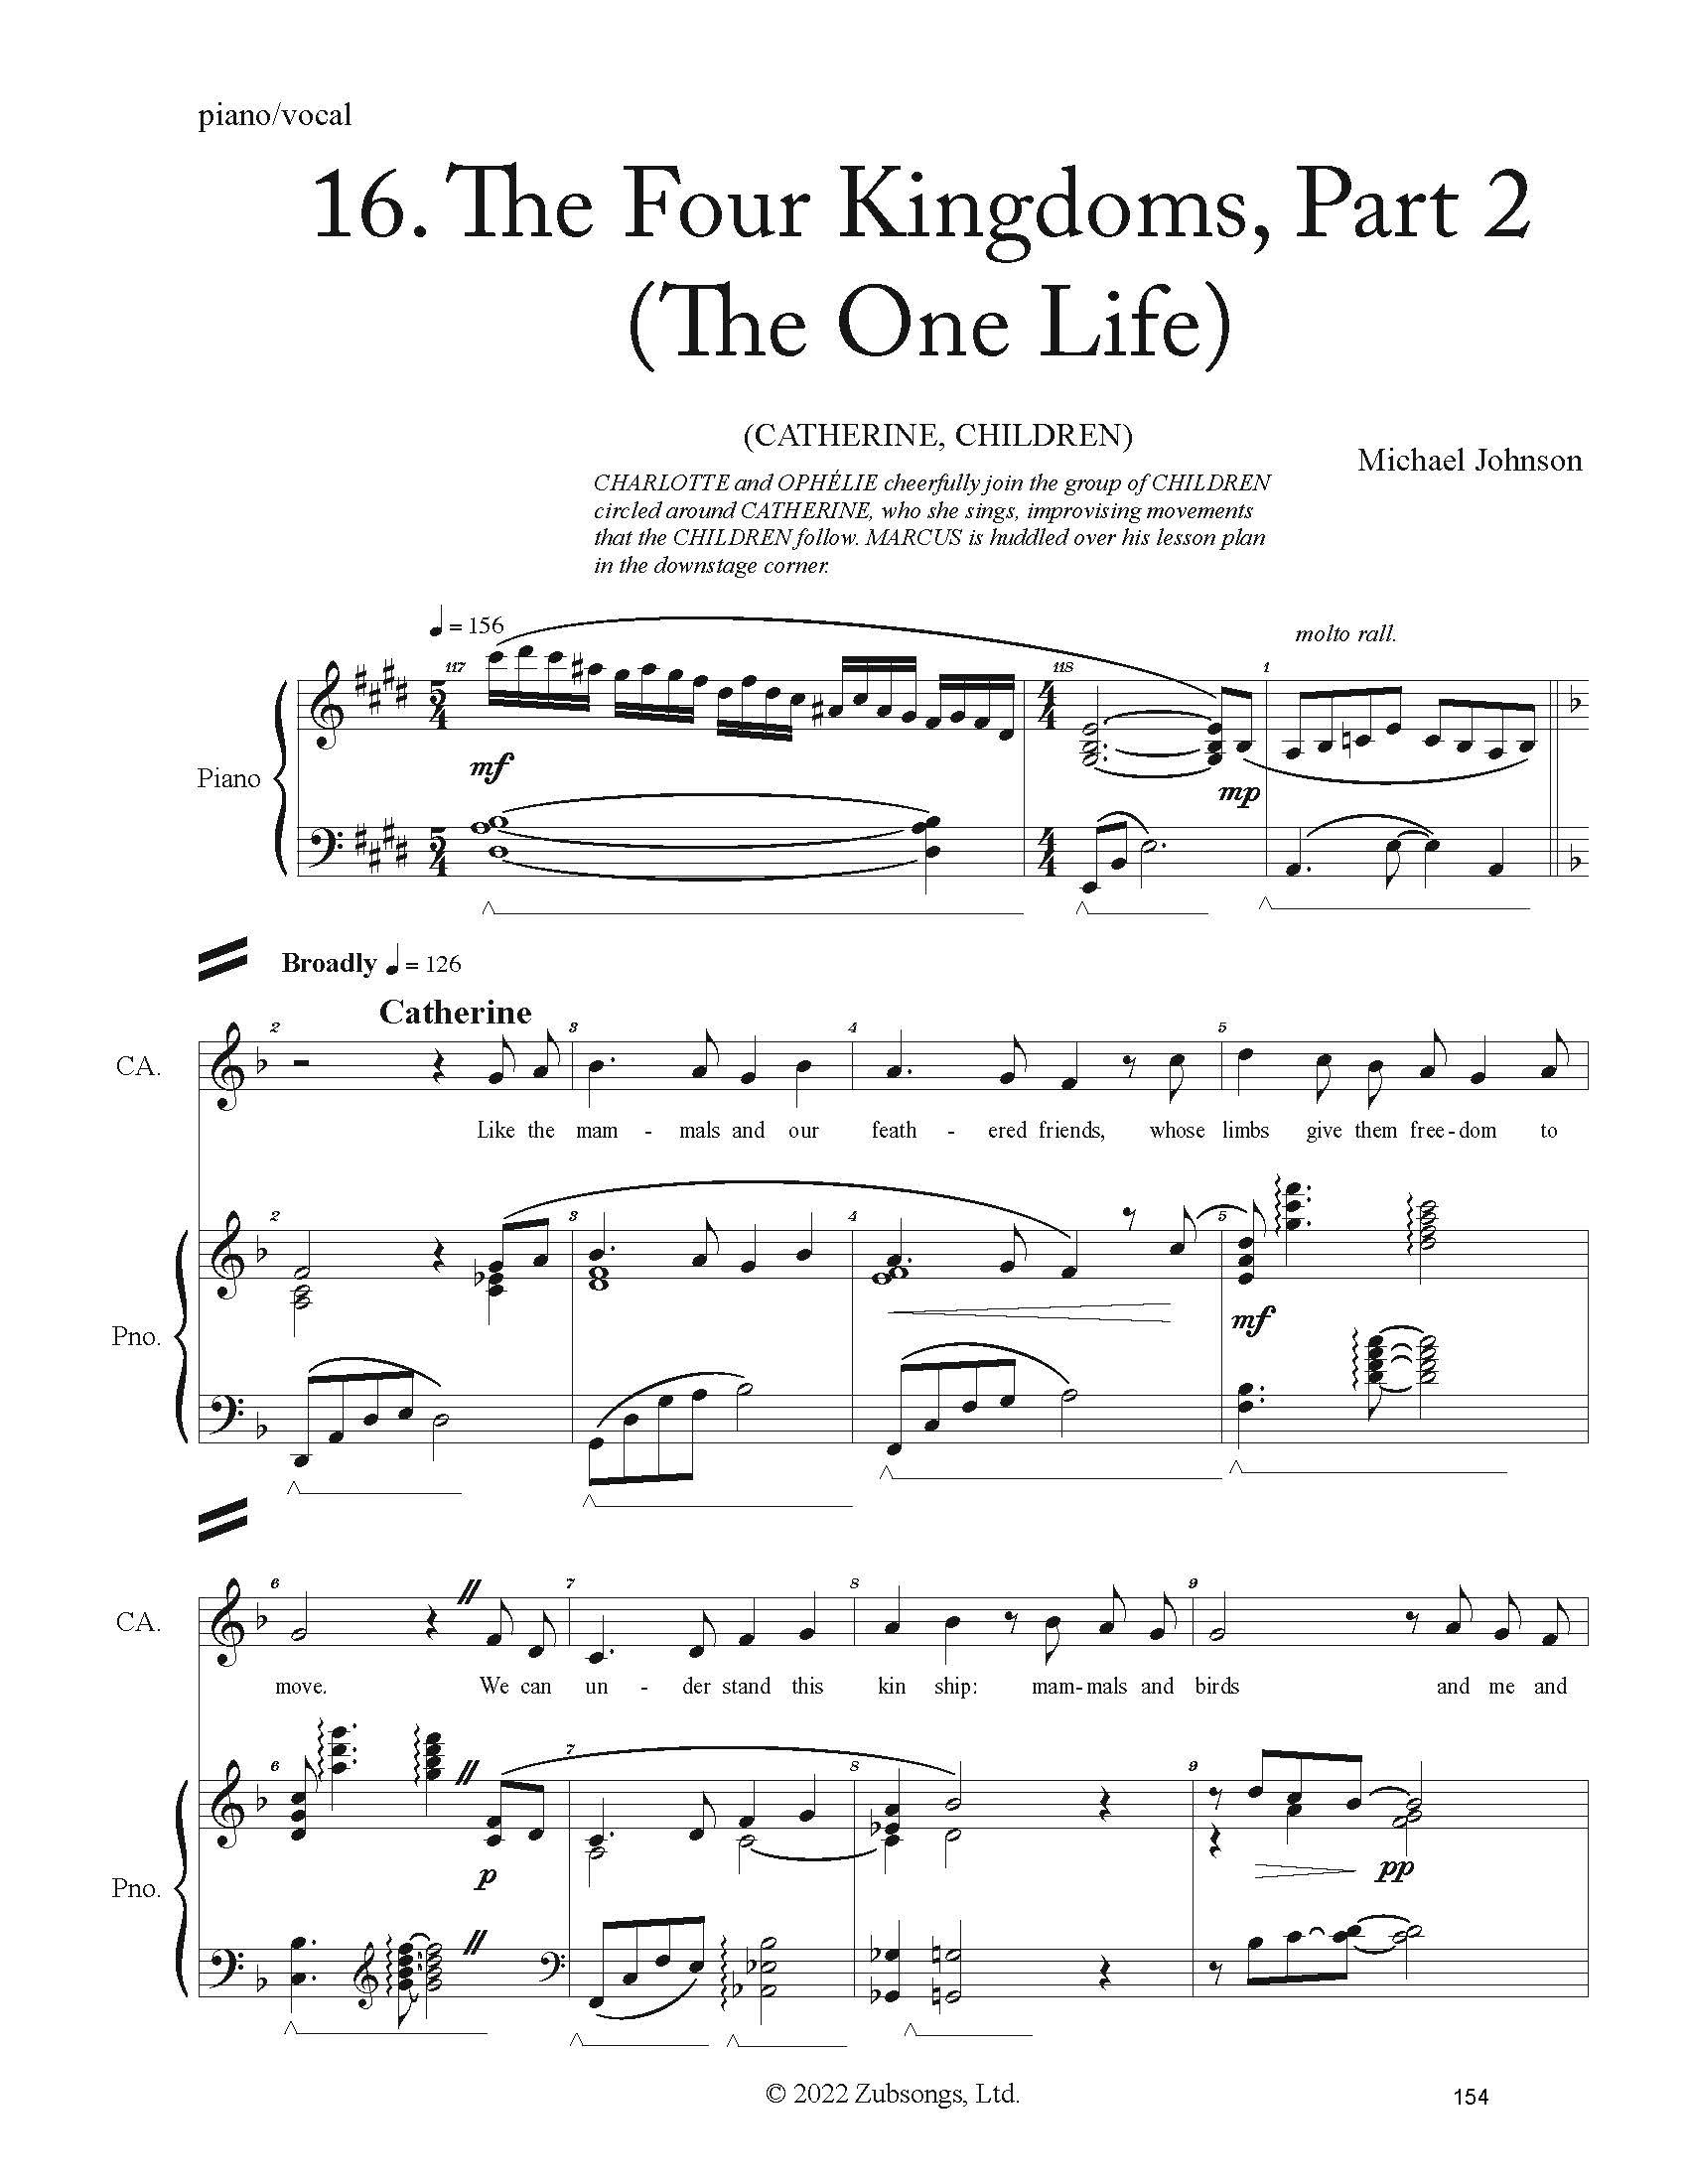 FULL PIANO VOCAL SCORE DRAFT 1 - Score_Page_154.jpg